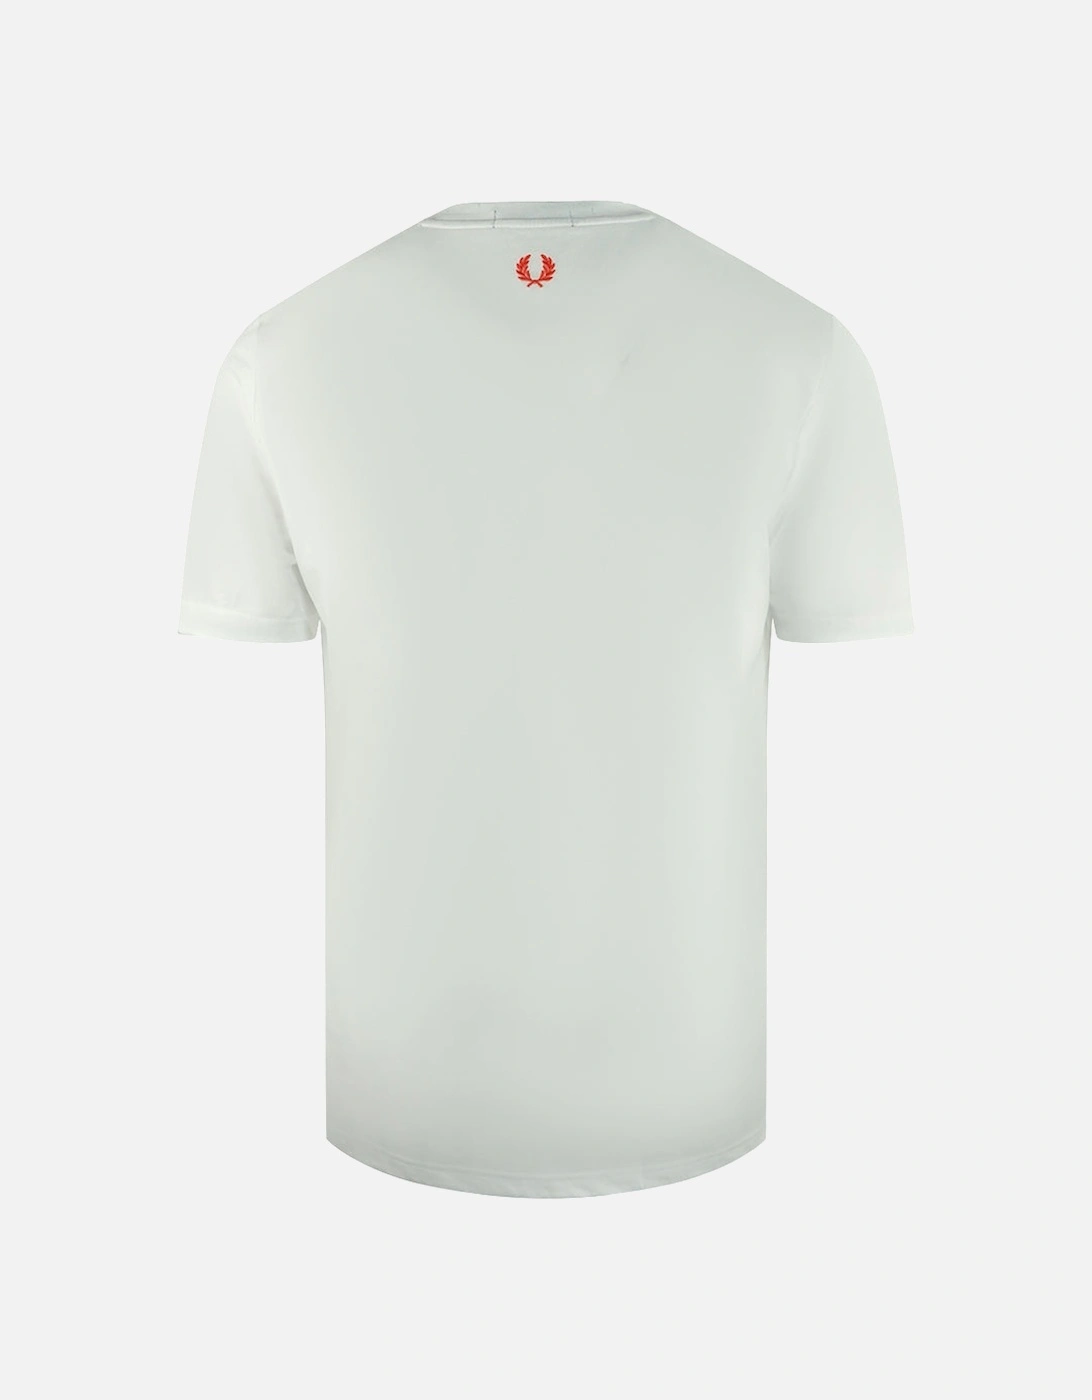 Arch Branding White T-Shirt